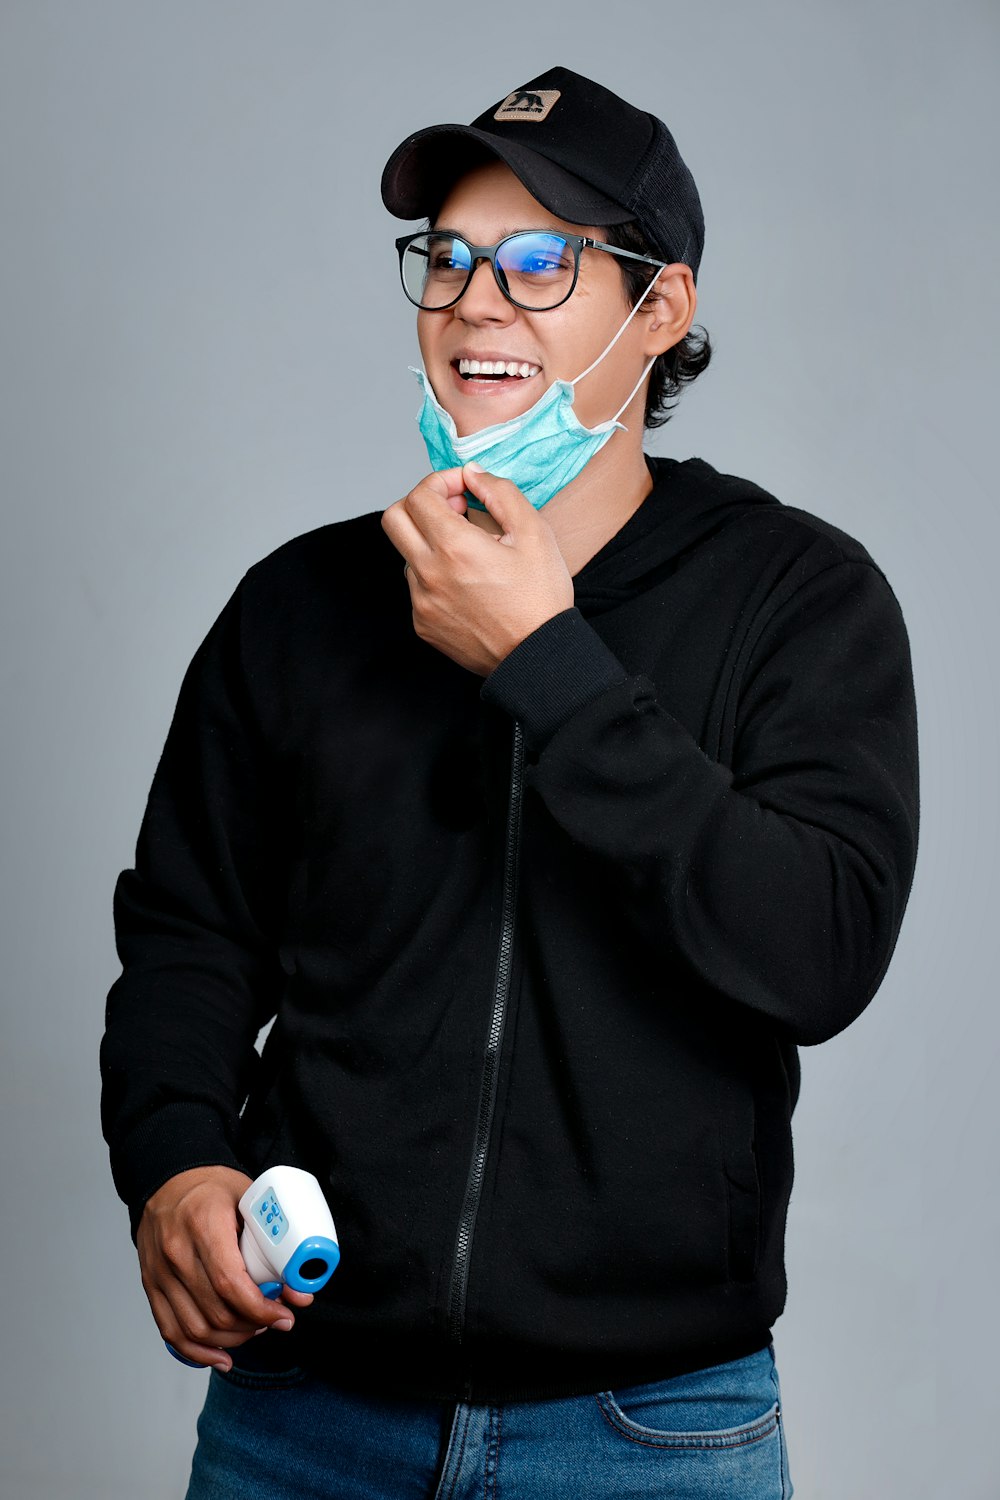 man in black zip up jacket wearing blue goggles